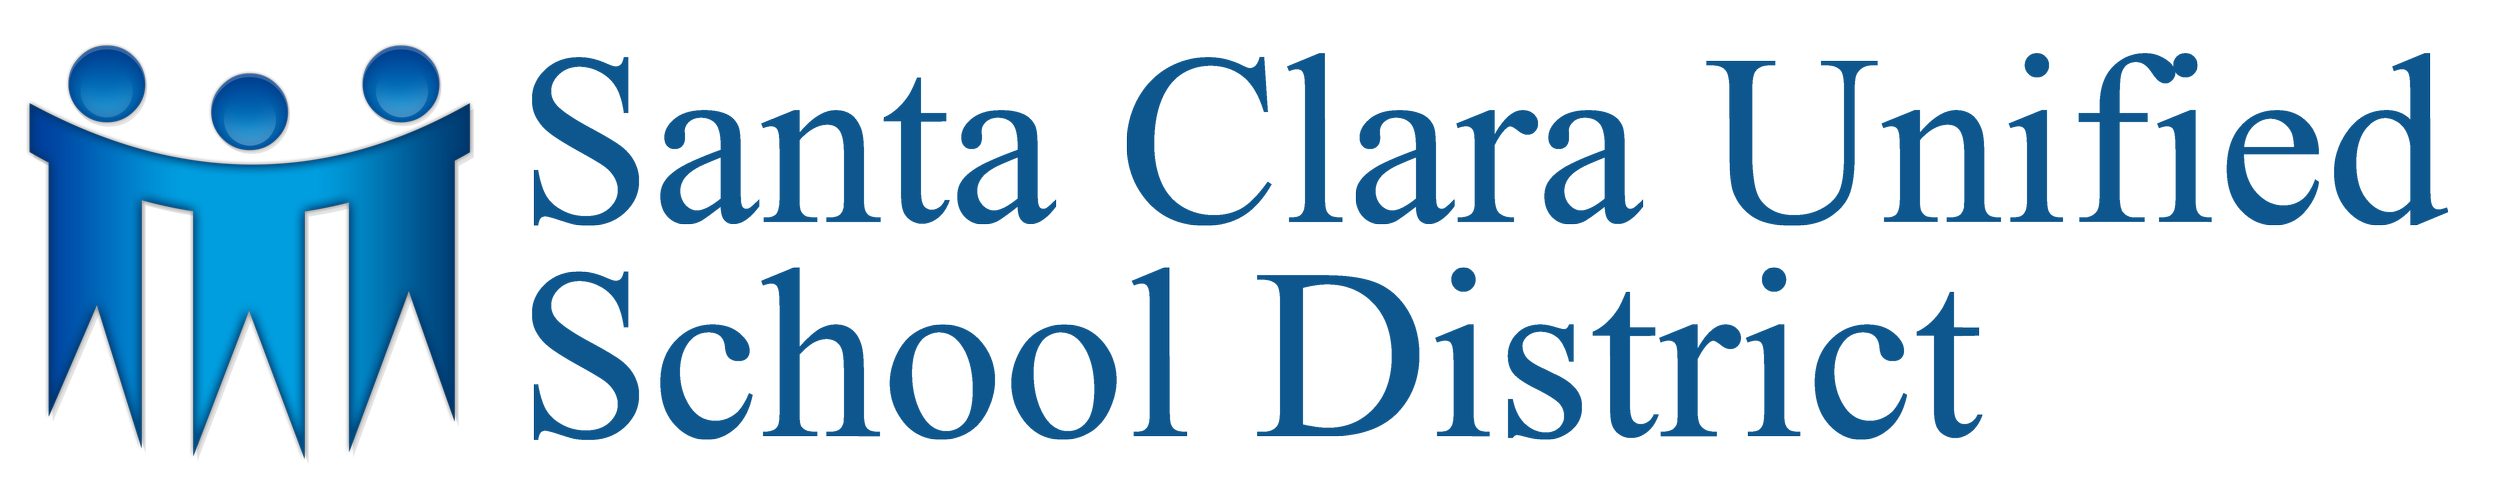 Santa Clara Unified School District Banner - Krista Woodward.png